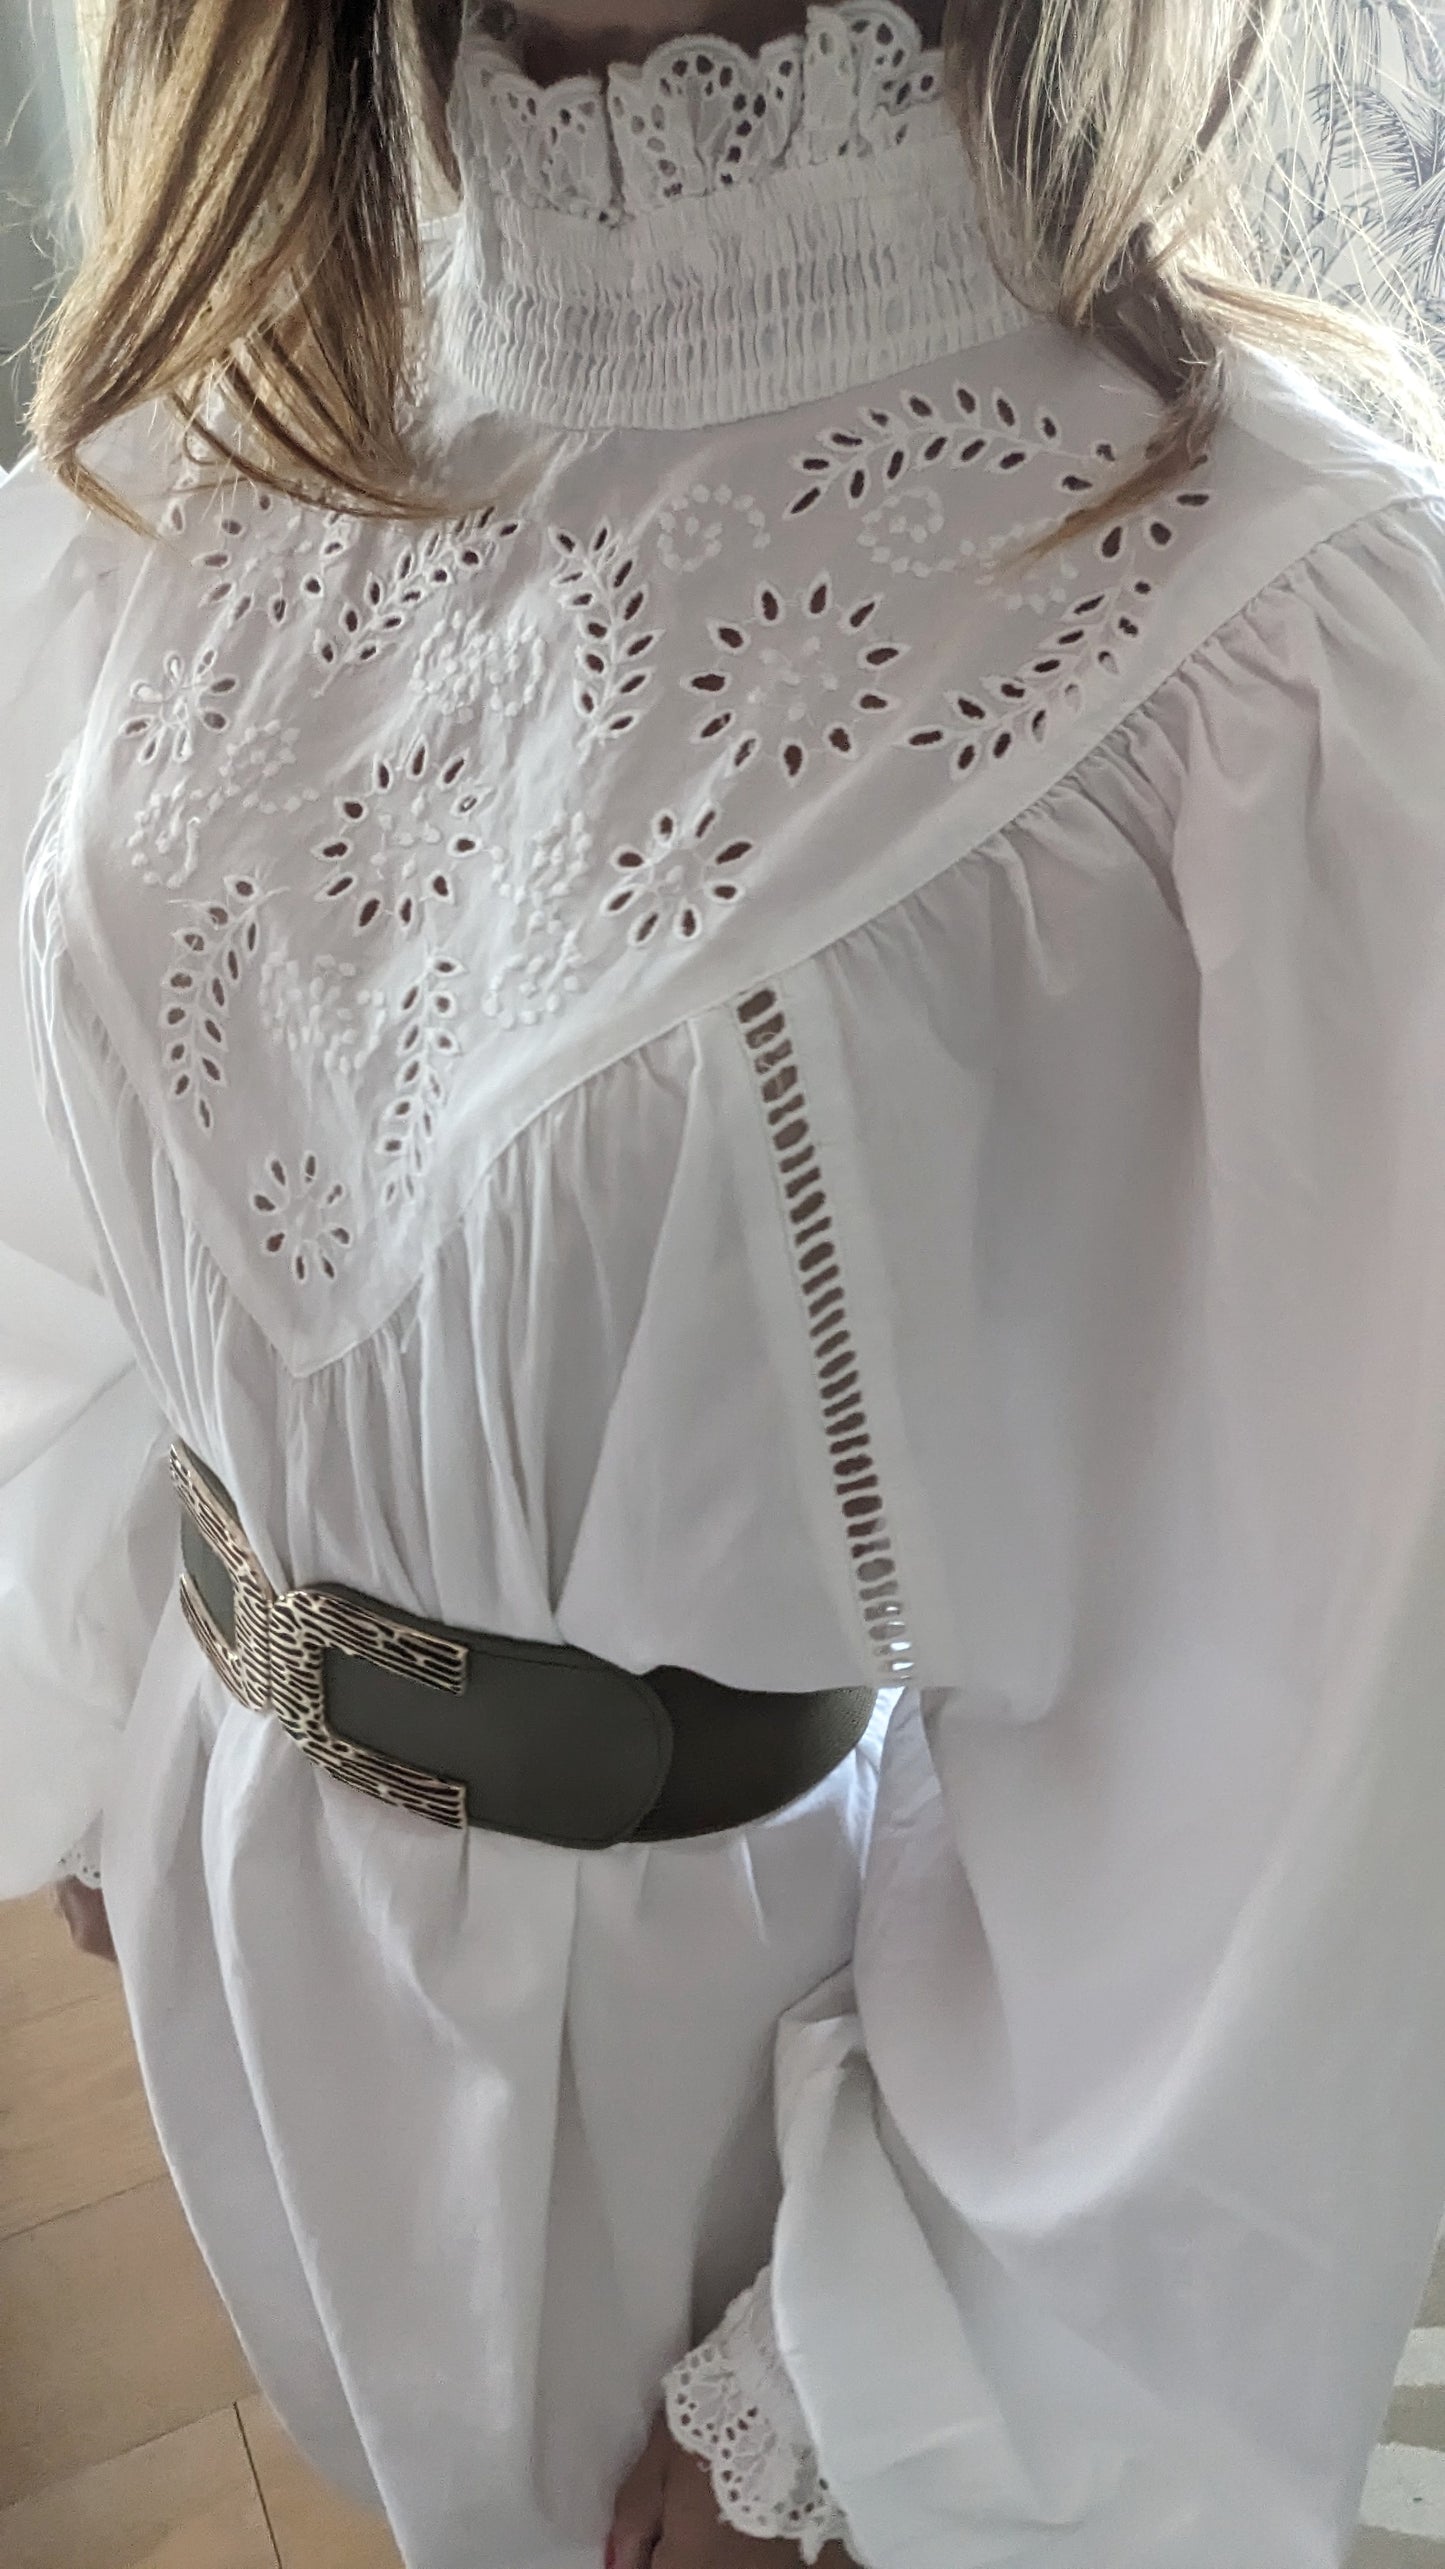 Neuve robe dentelle blanche - H&M - 34/36